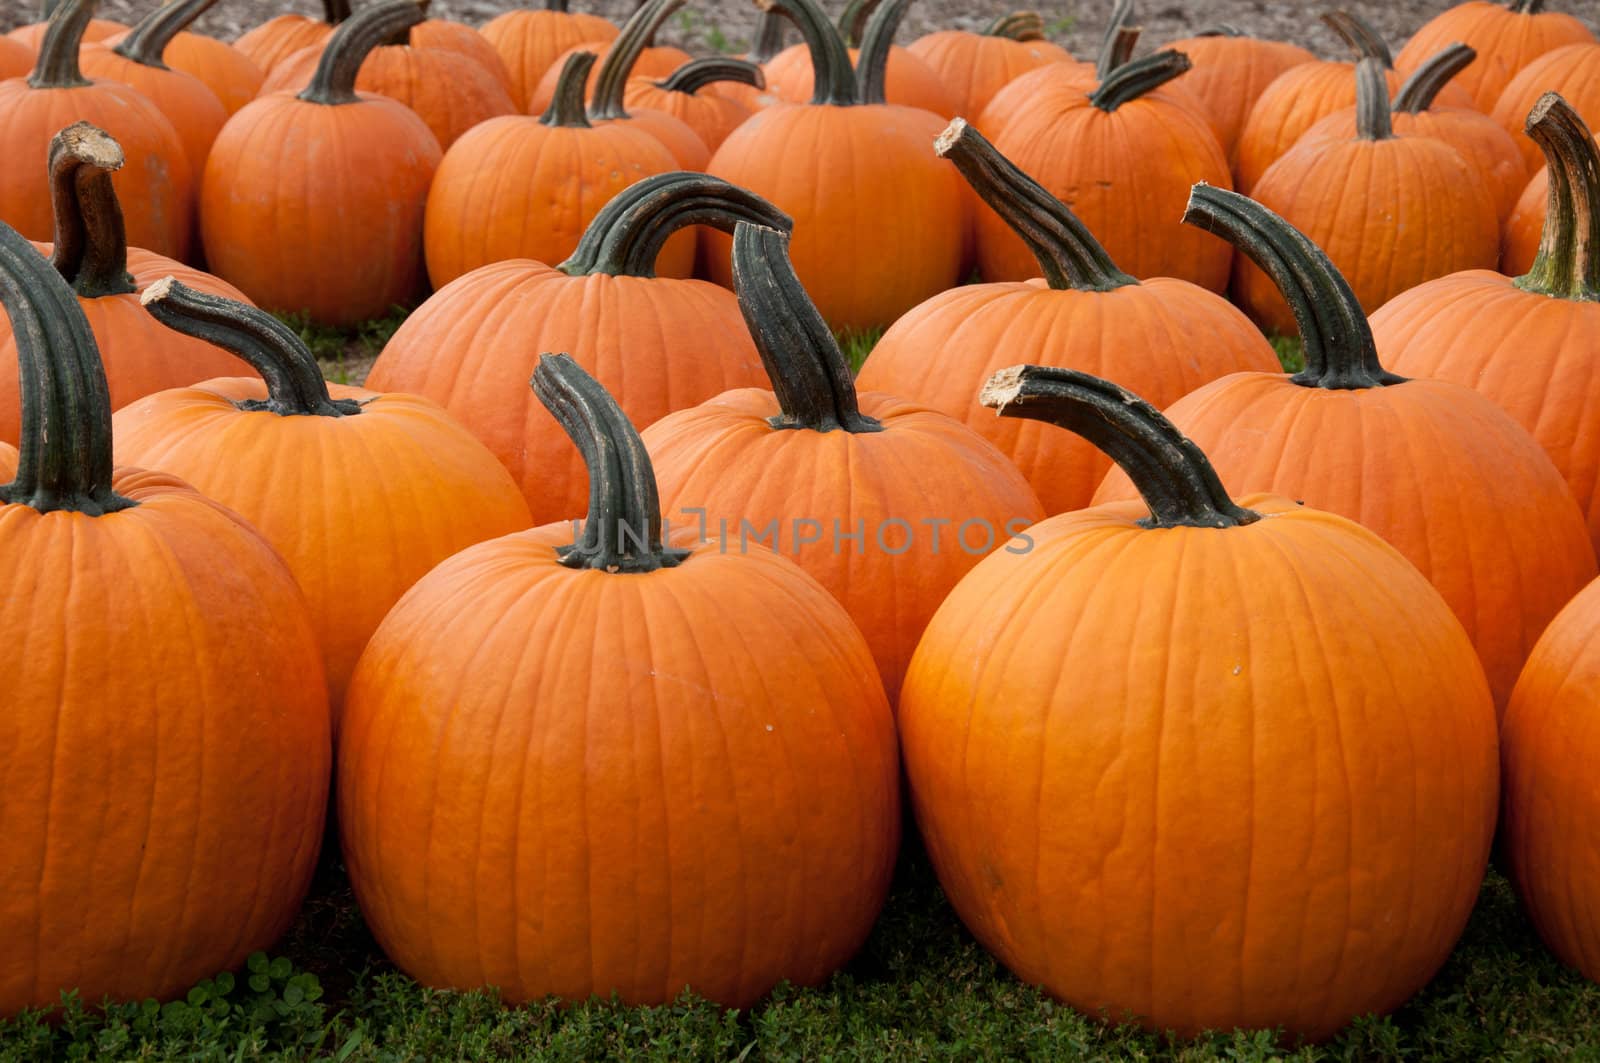 Pumpkins are set on display for sale.